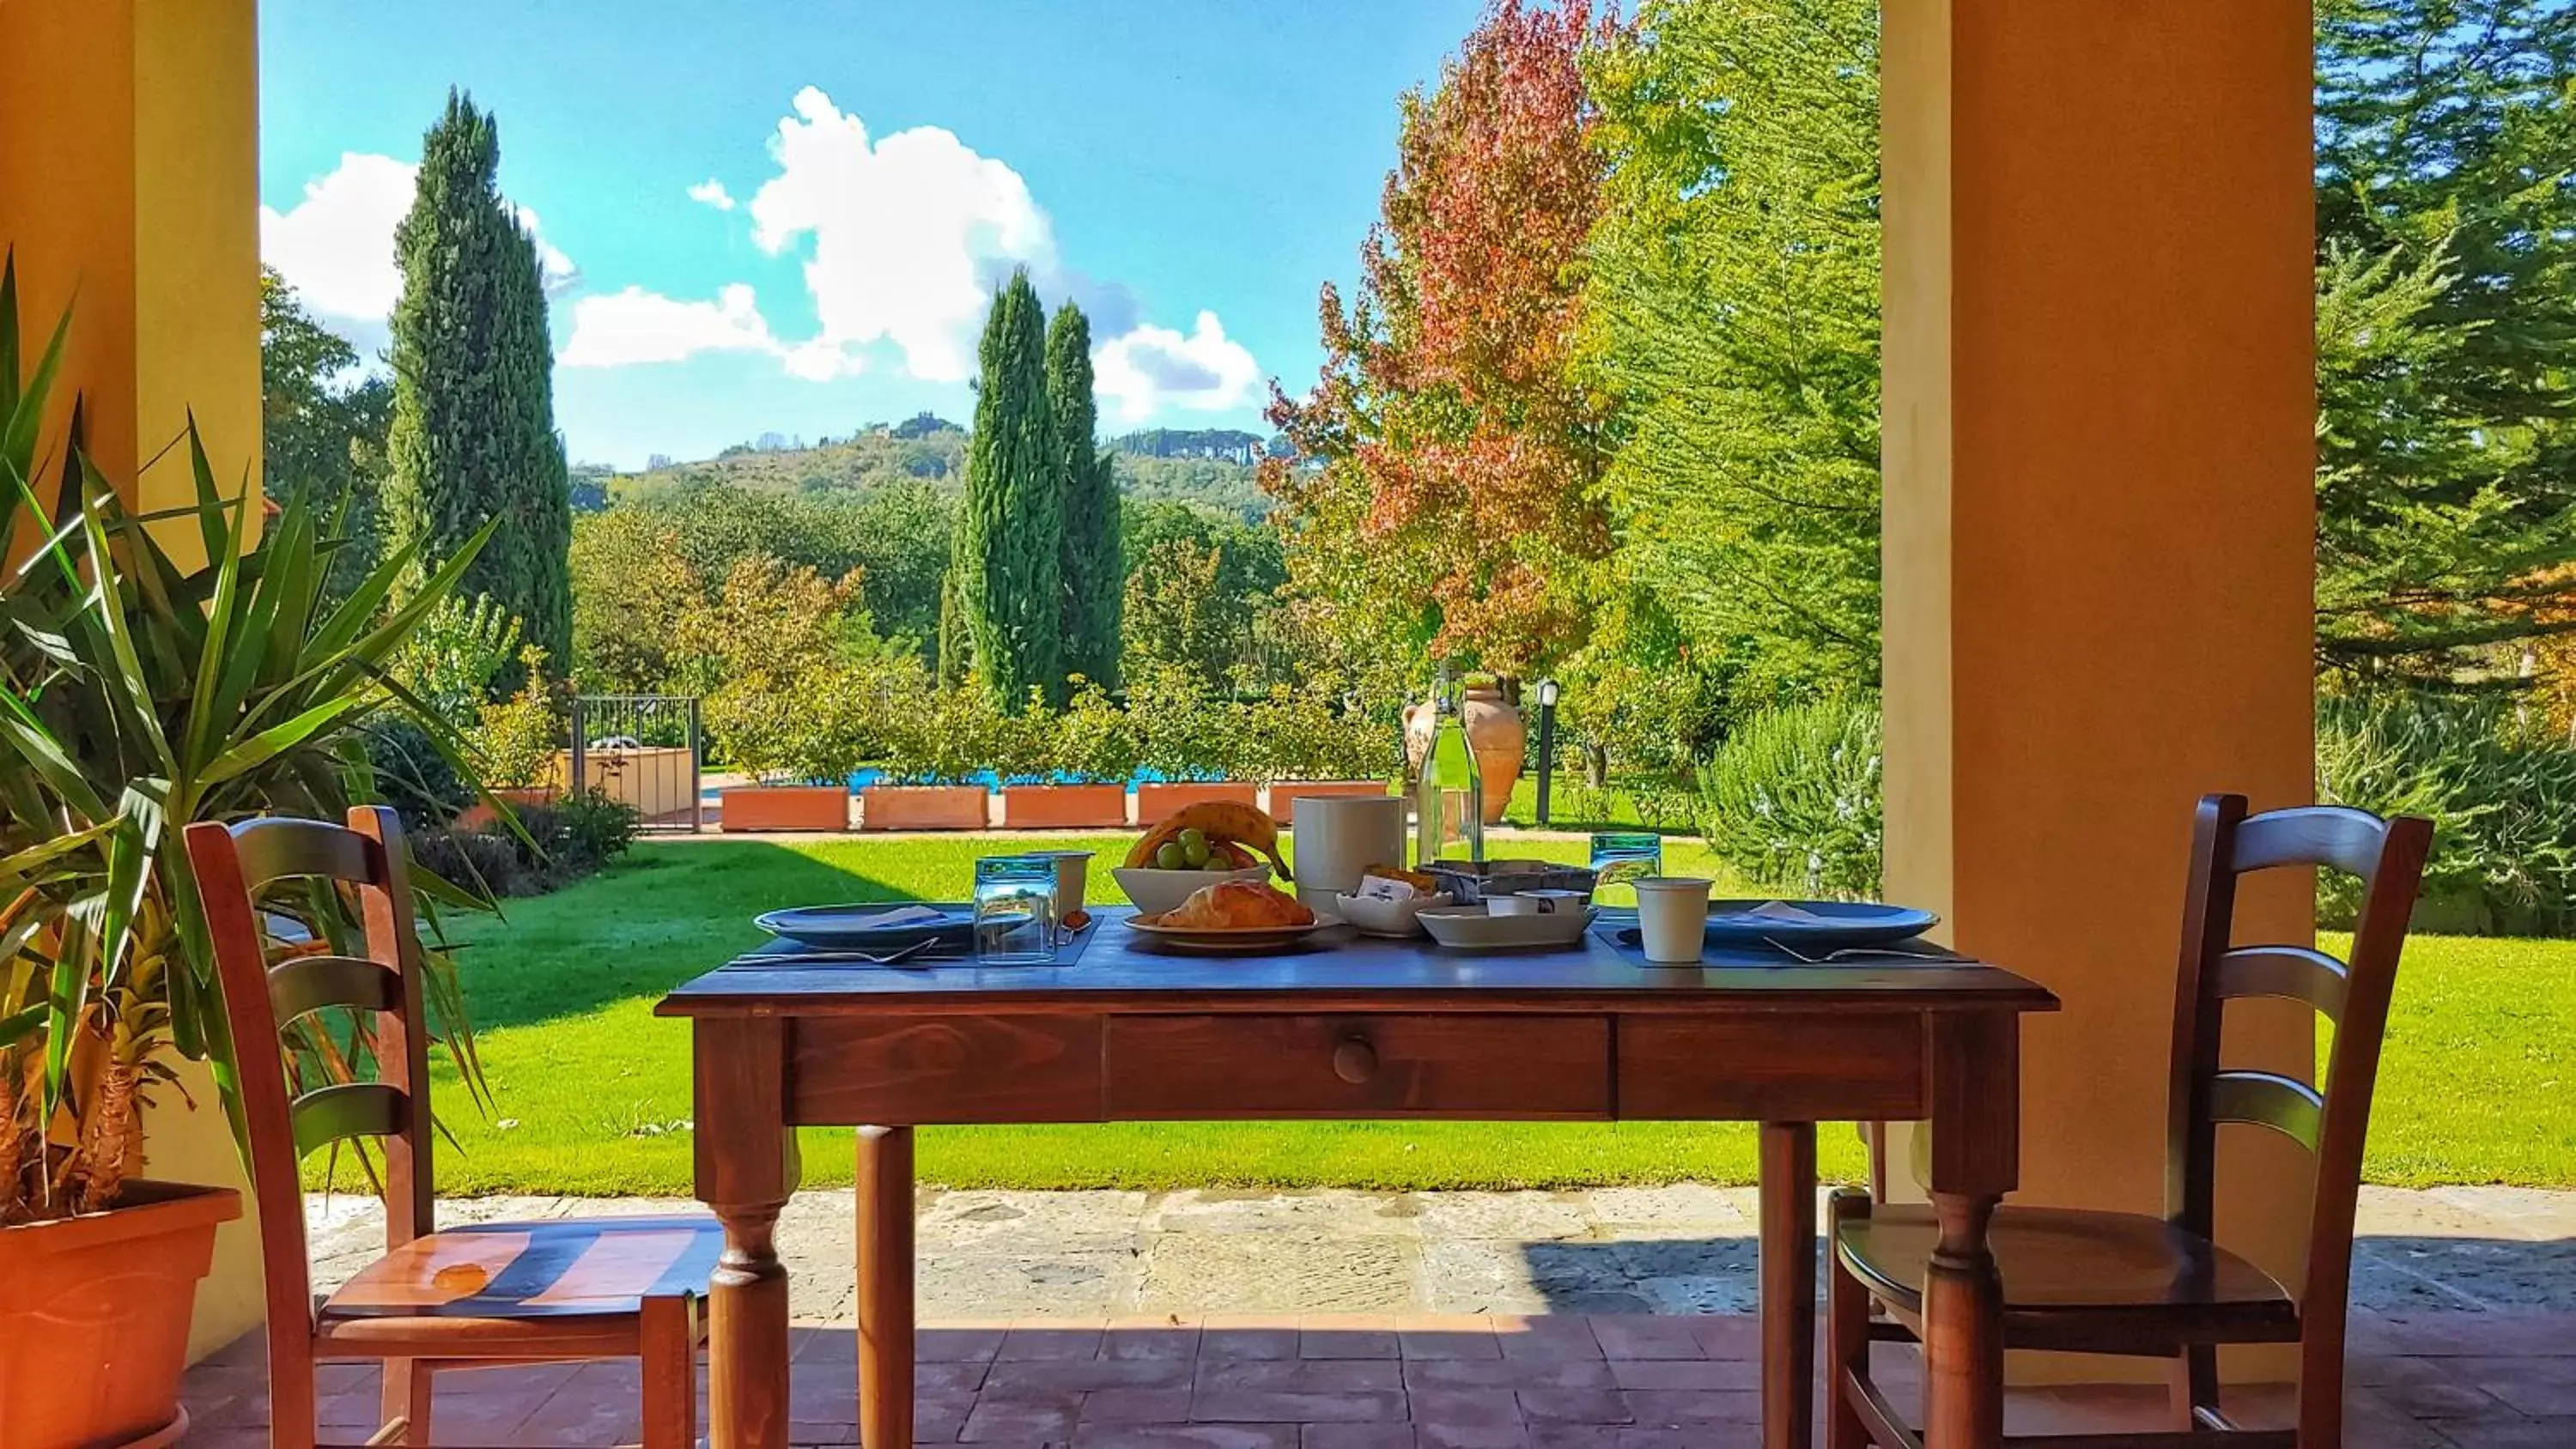 Breakfast in Torrebianca Tuscany